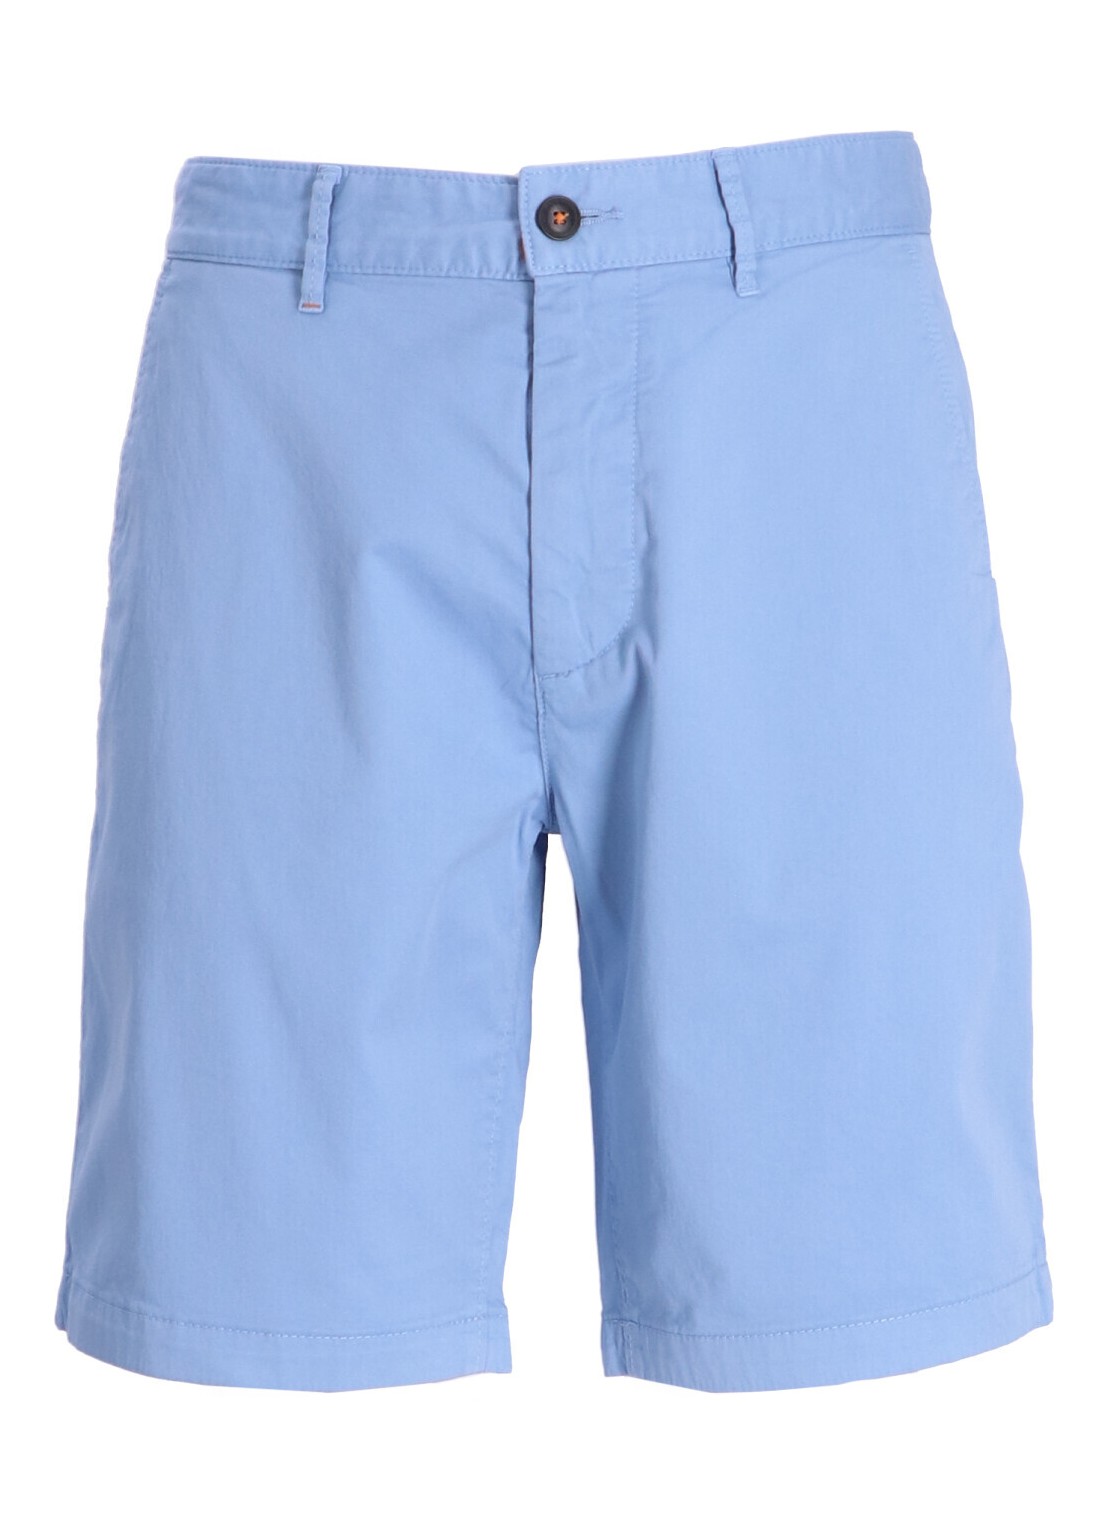 Pantalon corto boss short pant manchino-slim-shorts - 50513026 455 talla 34
 